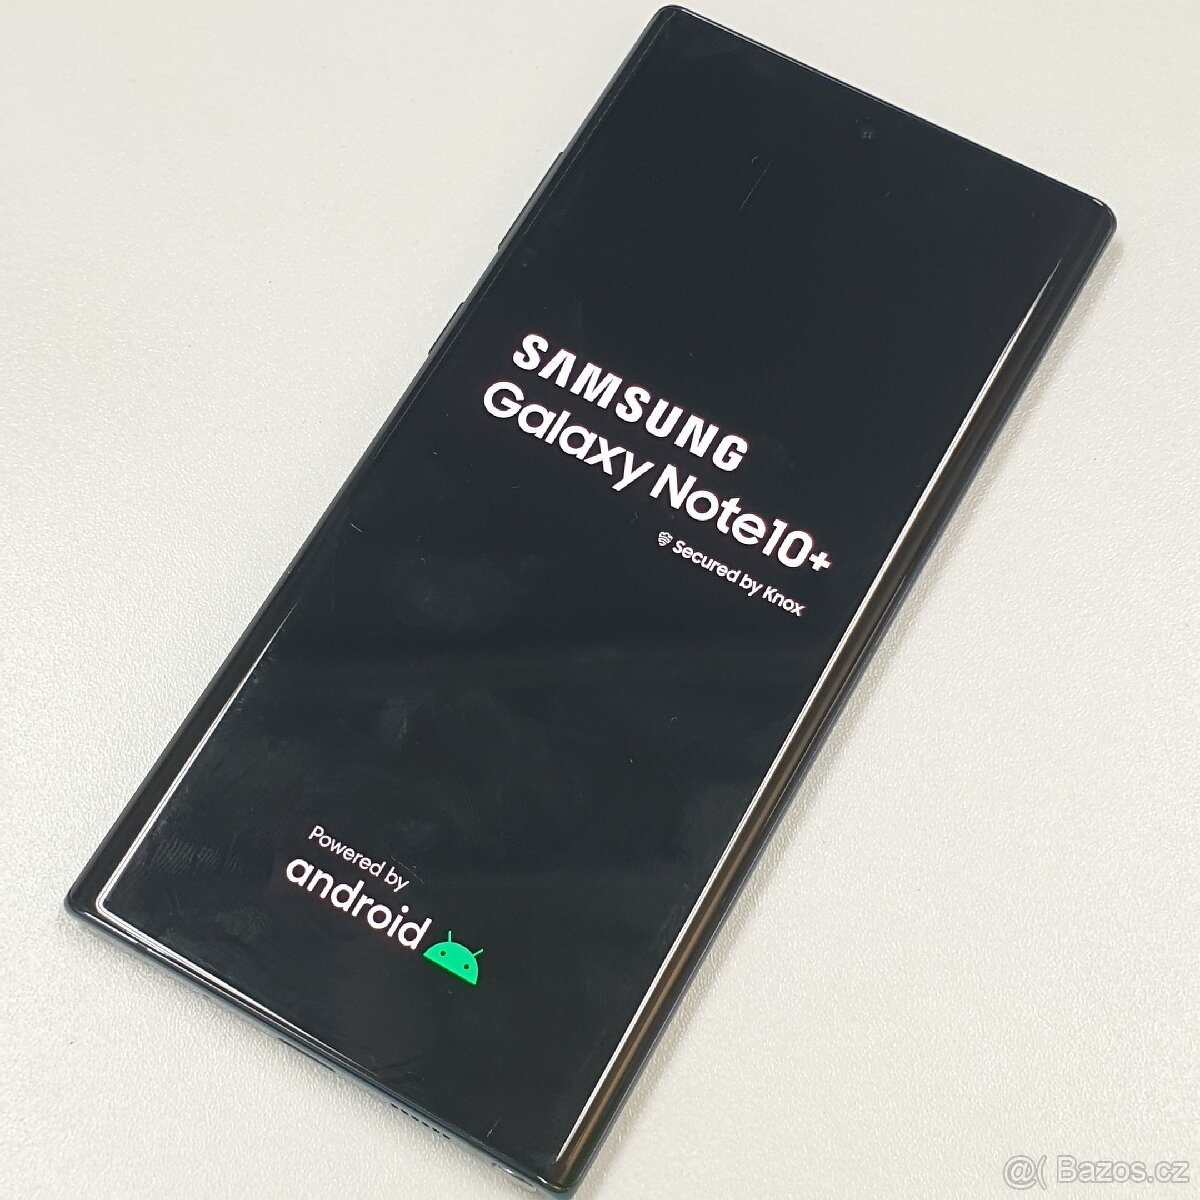 Samsung Galaxy Note 10 plus, stav nového, 12 GB / 256 GB